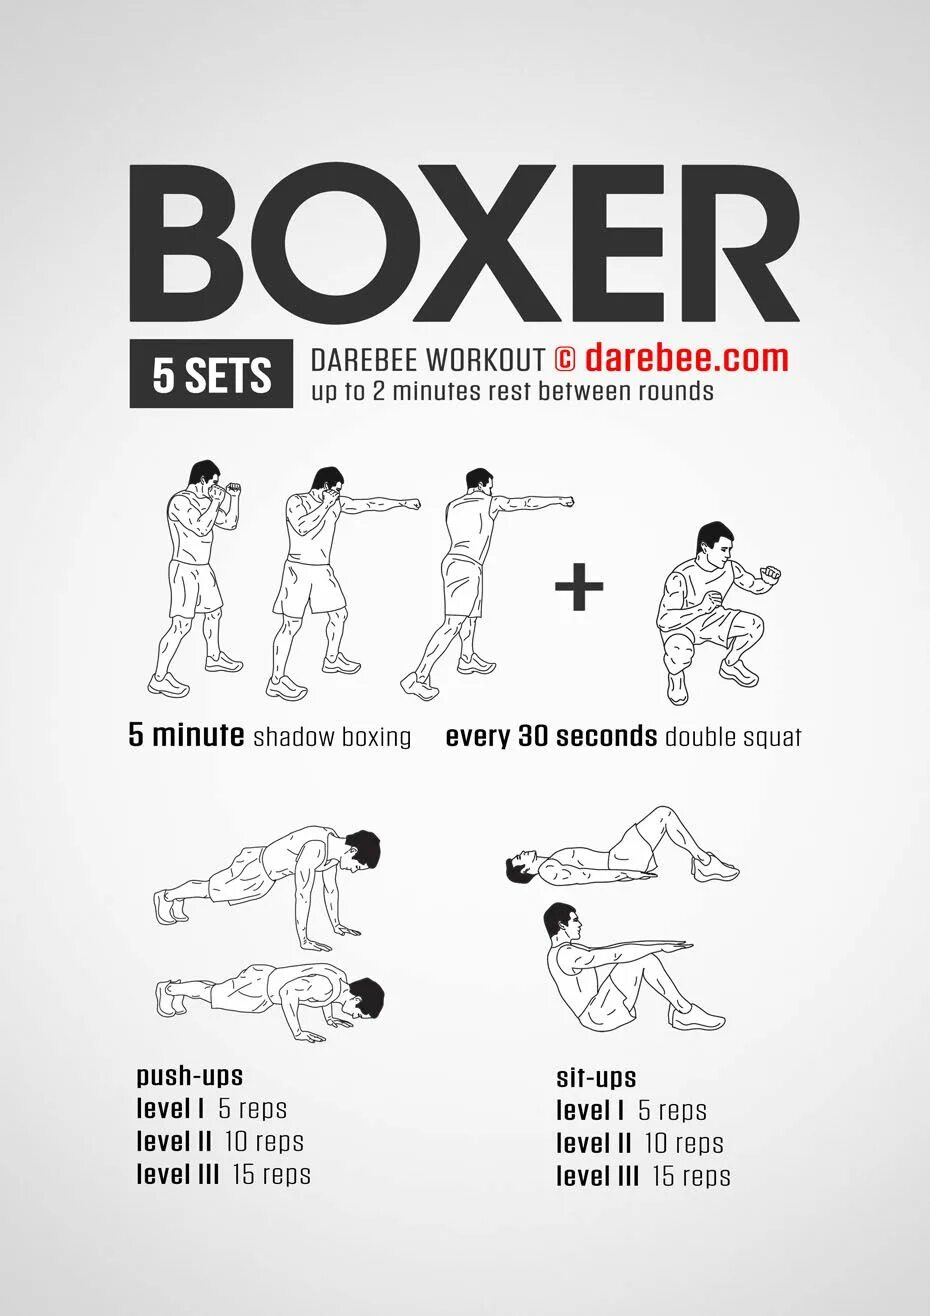 DAREBEE Boxer Workout. План тренировок бокс. План тренировки боксера. Упражнения для бокса.